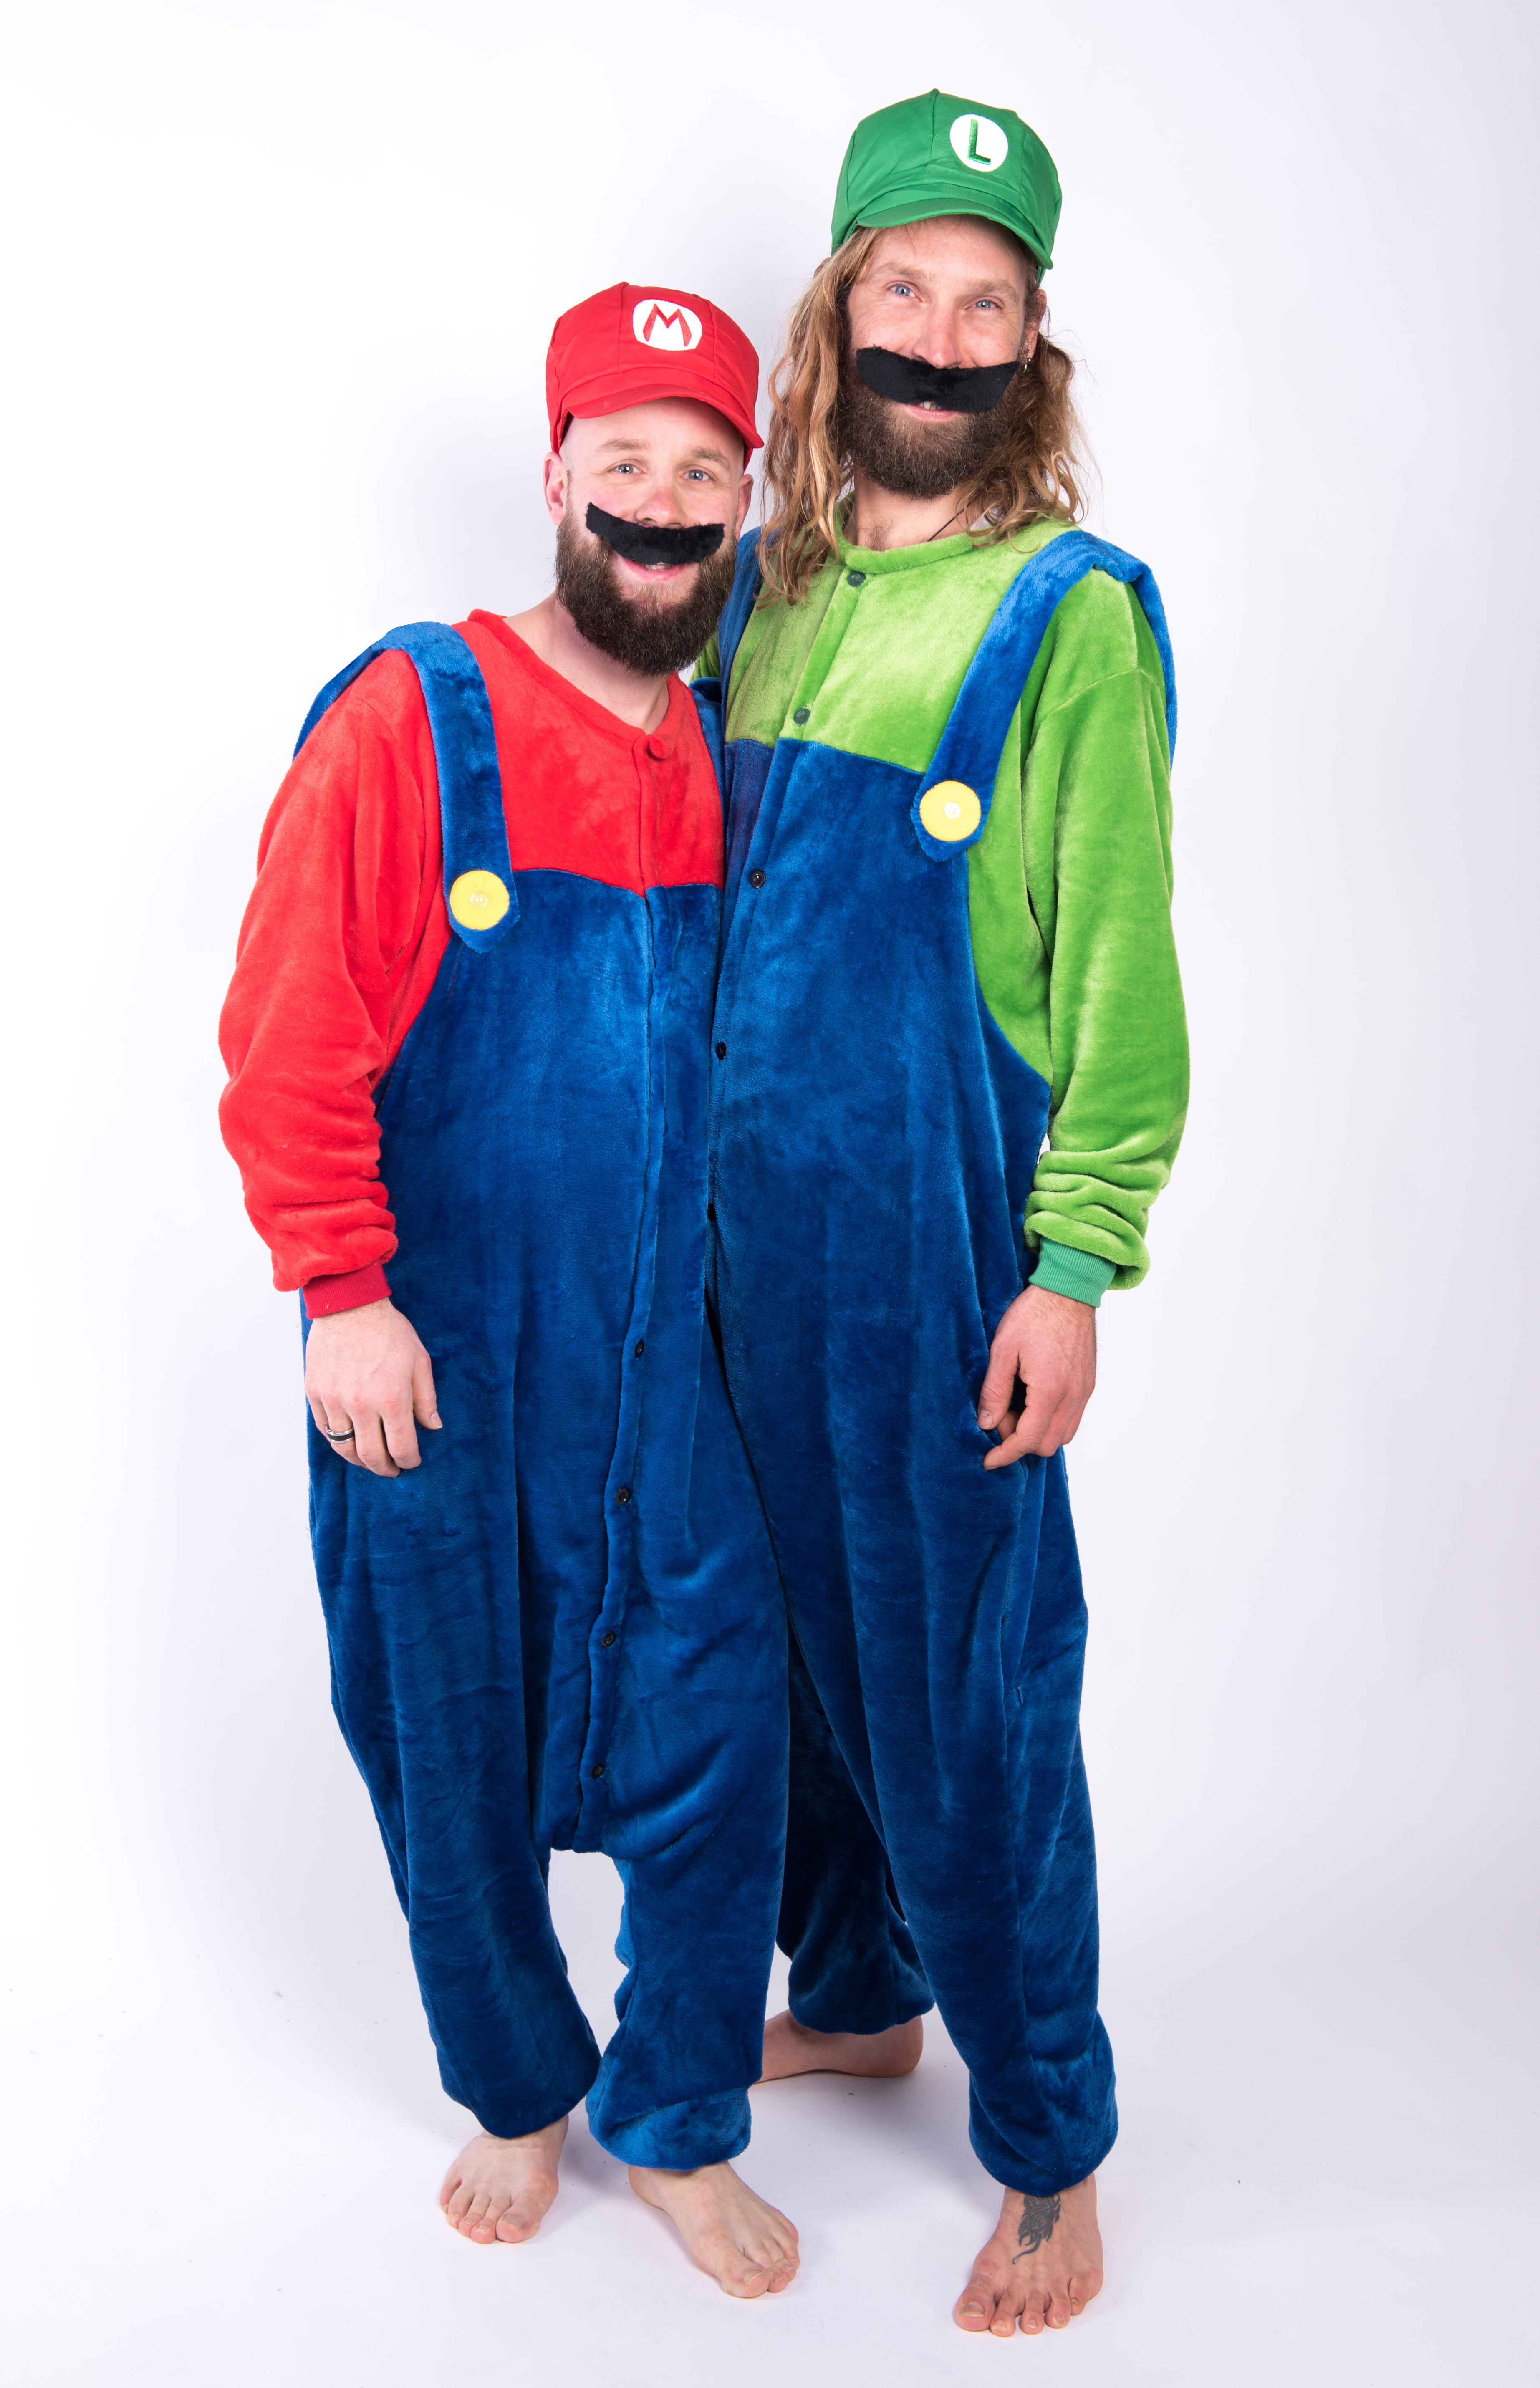 Super Mario onesie kostuum pak kopen? €29,95 FeestinjeBeest.nl!